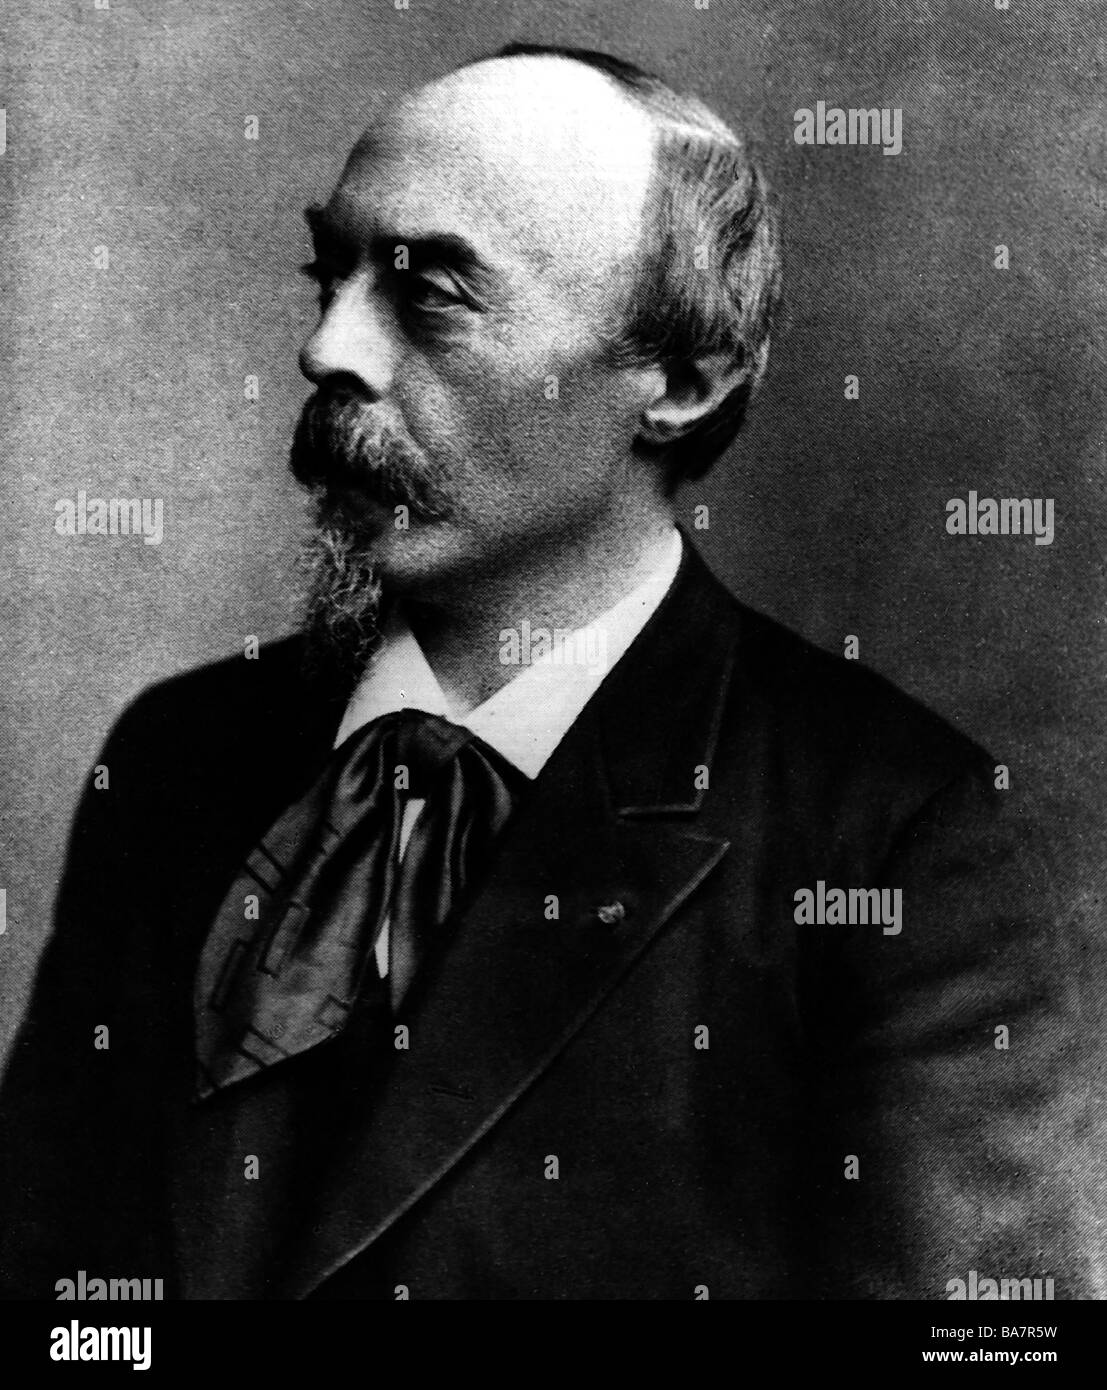 Bülow, Hans Freiherr von, 8.1.1830 - 12.2.1894, German musician (pianist and conductor), portrait, photography, 19th century, Stock Photo